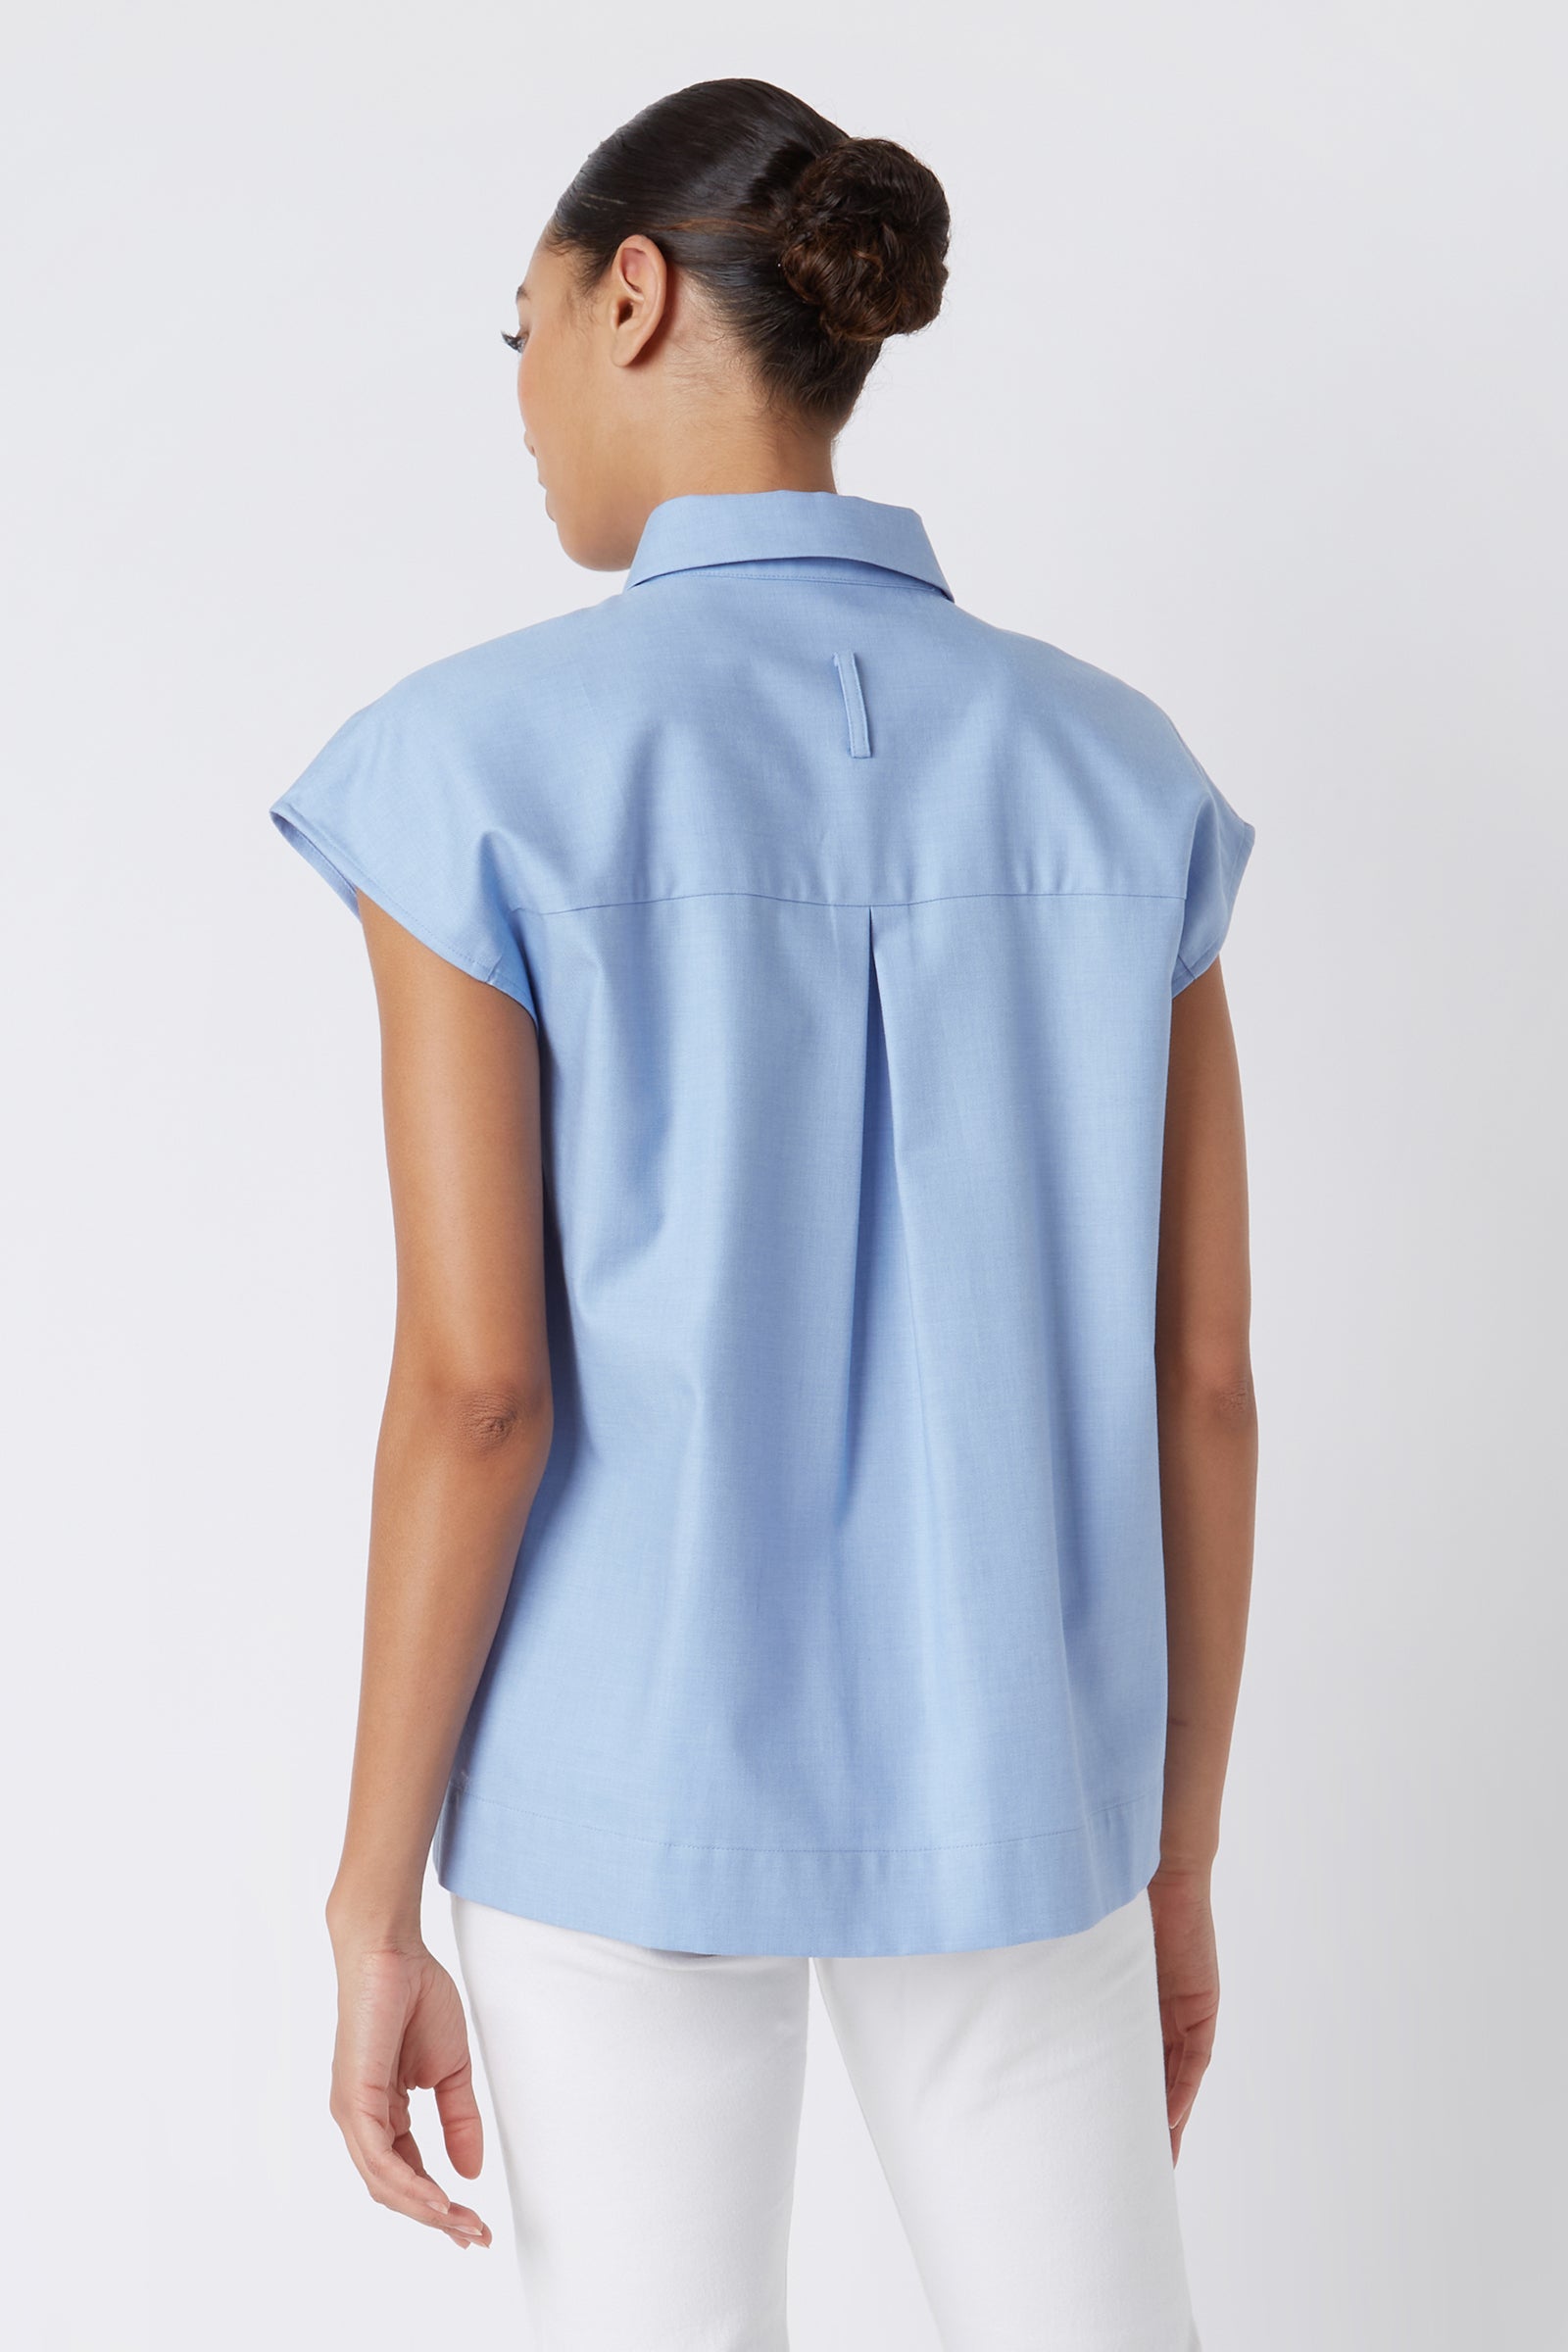 Kal Rieman Jane Cap Sleeve Shirt in Blue on Model Main Full Front View